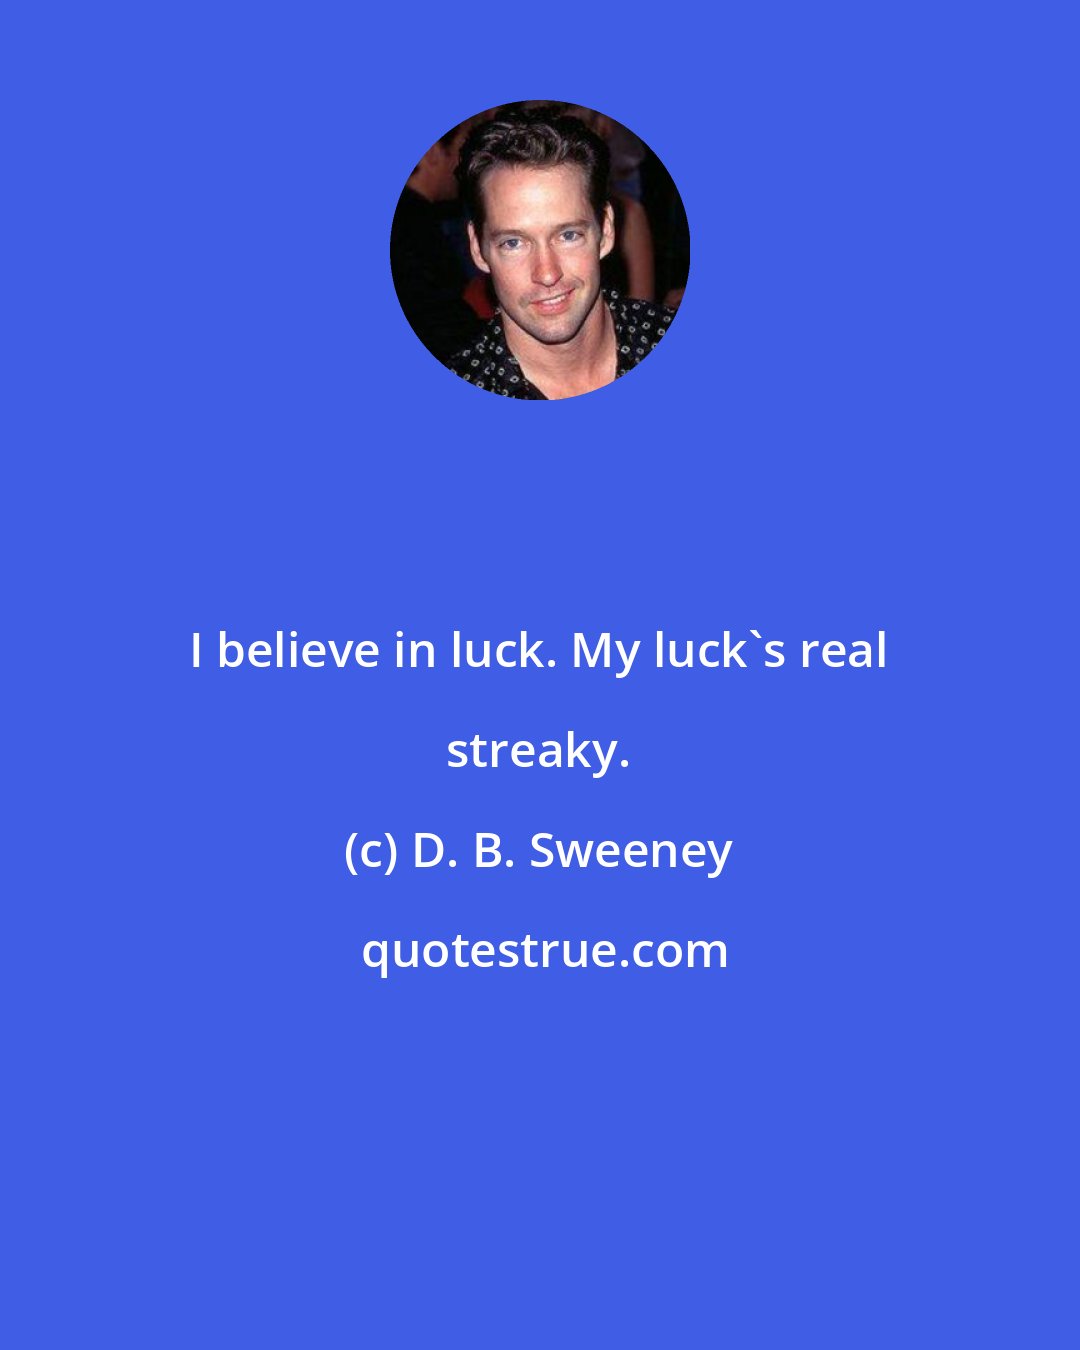 D. B. Sweeney: I believe in luck. My luck's real streaky.